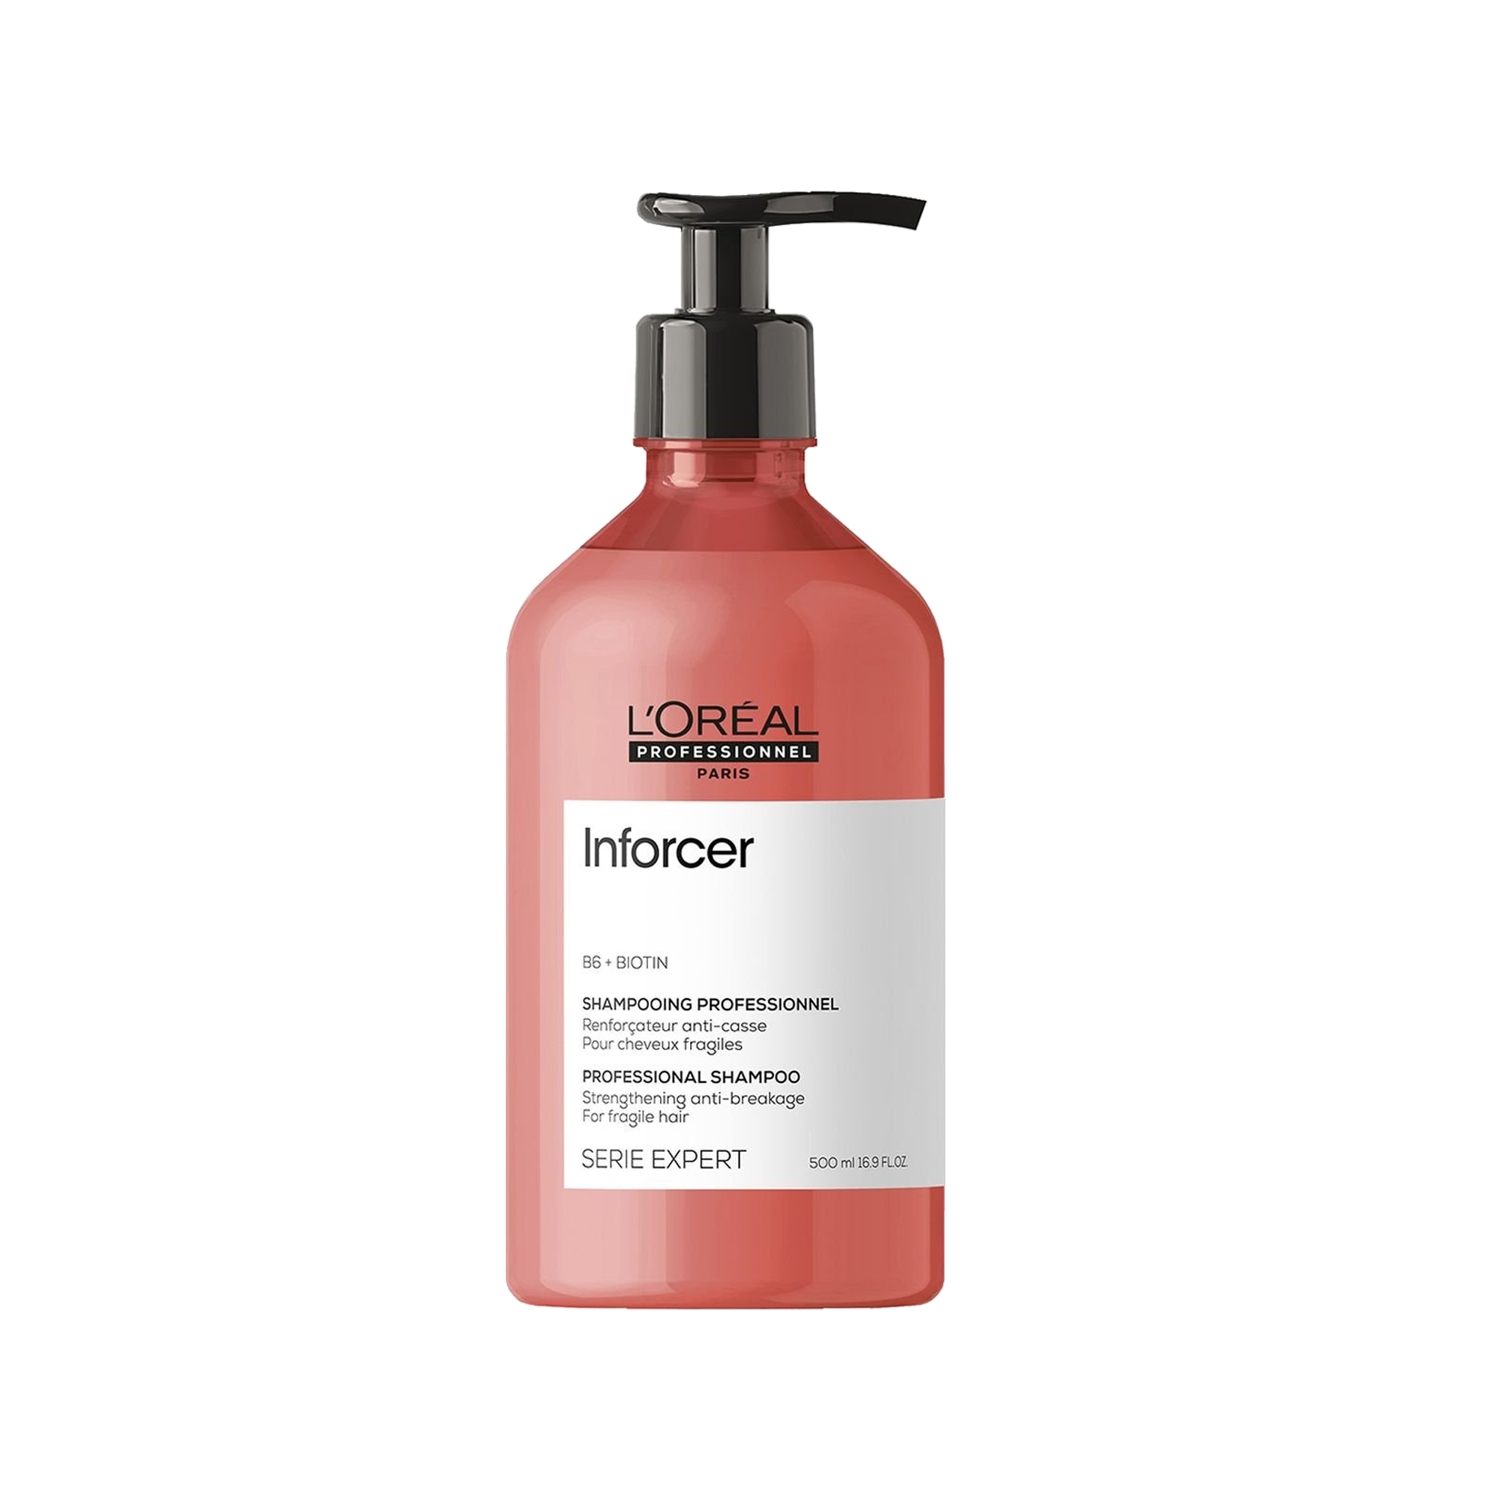 loreal professionnel inforcer szampon